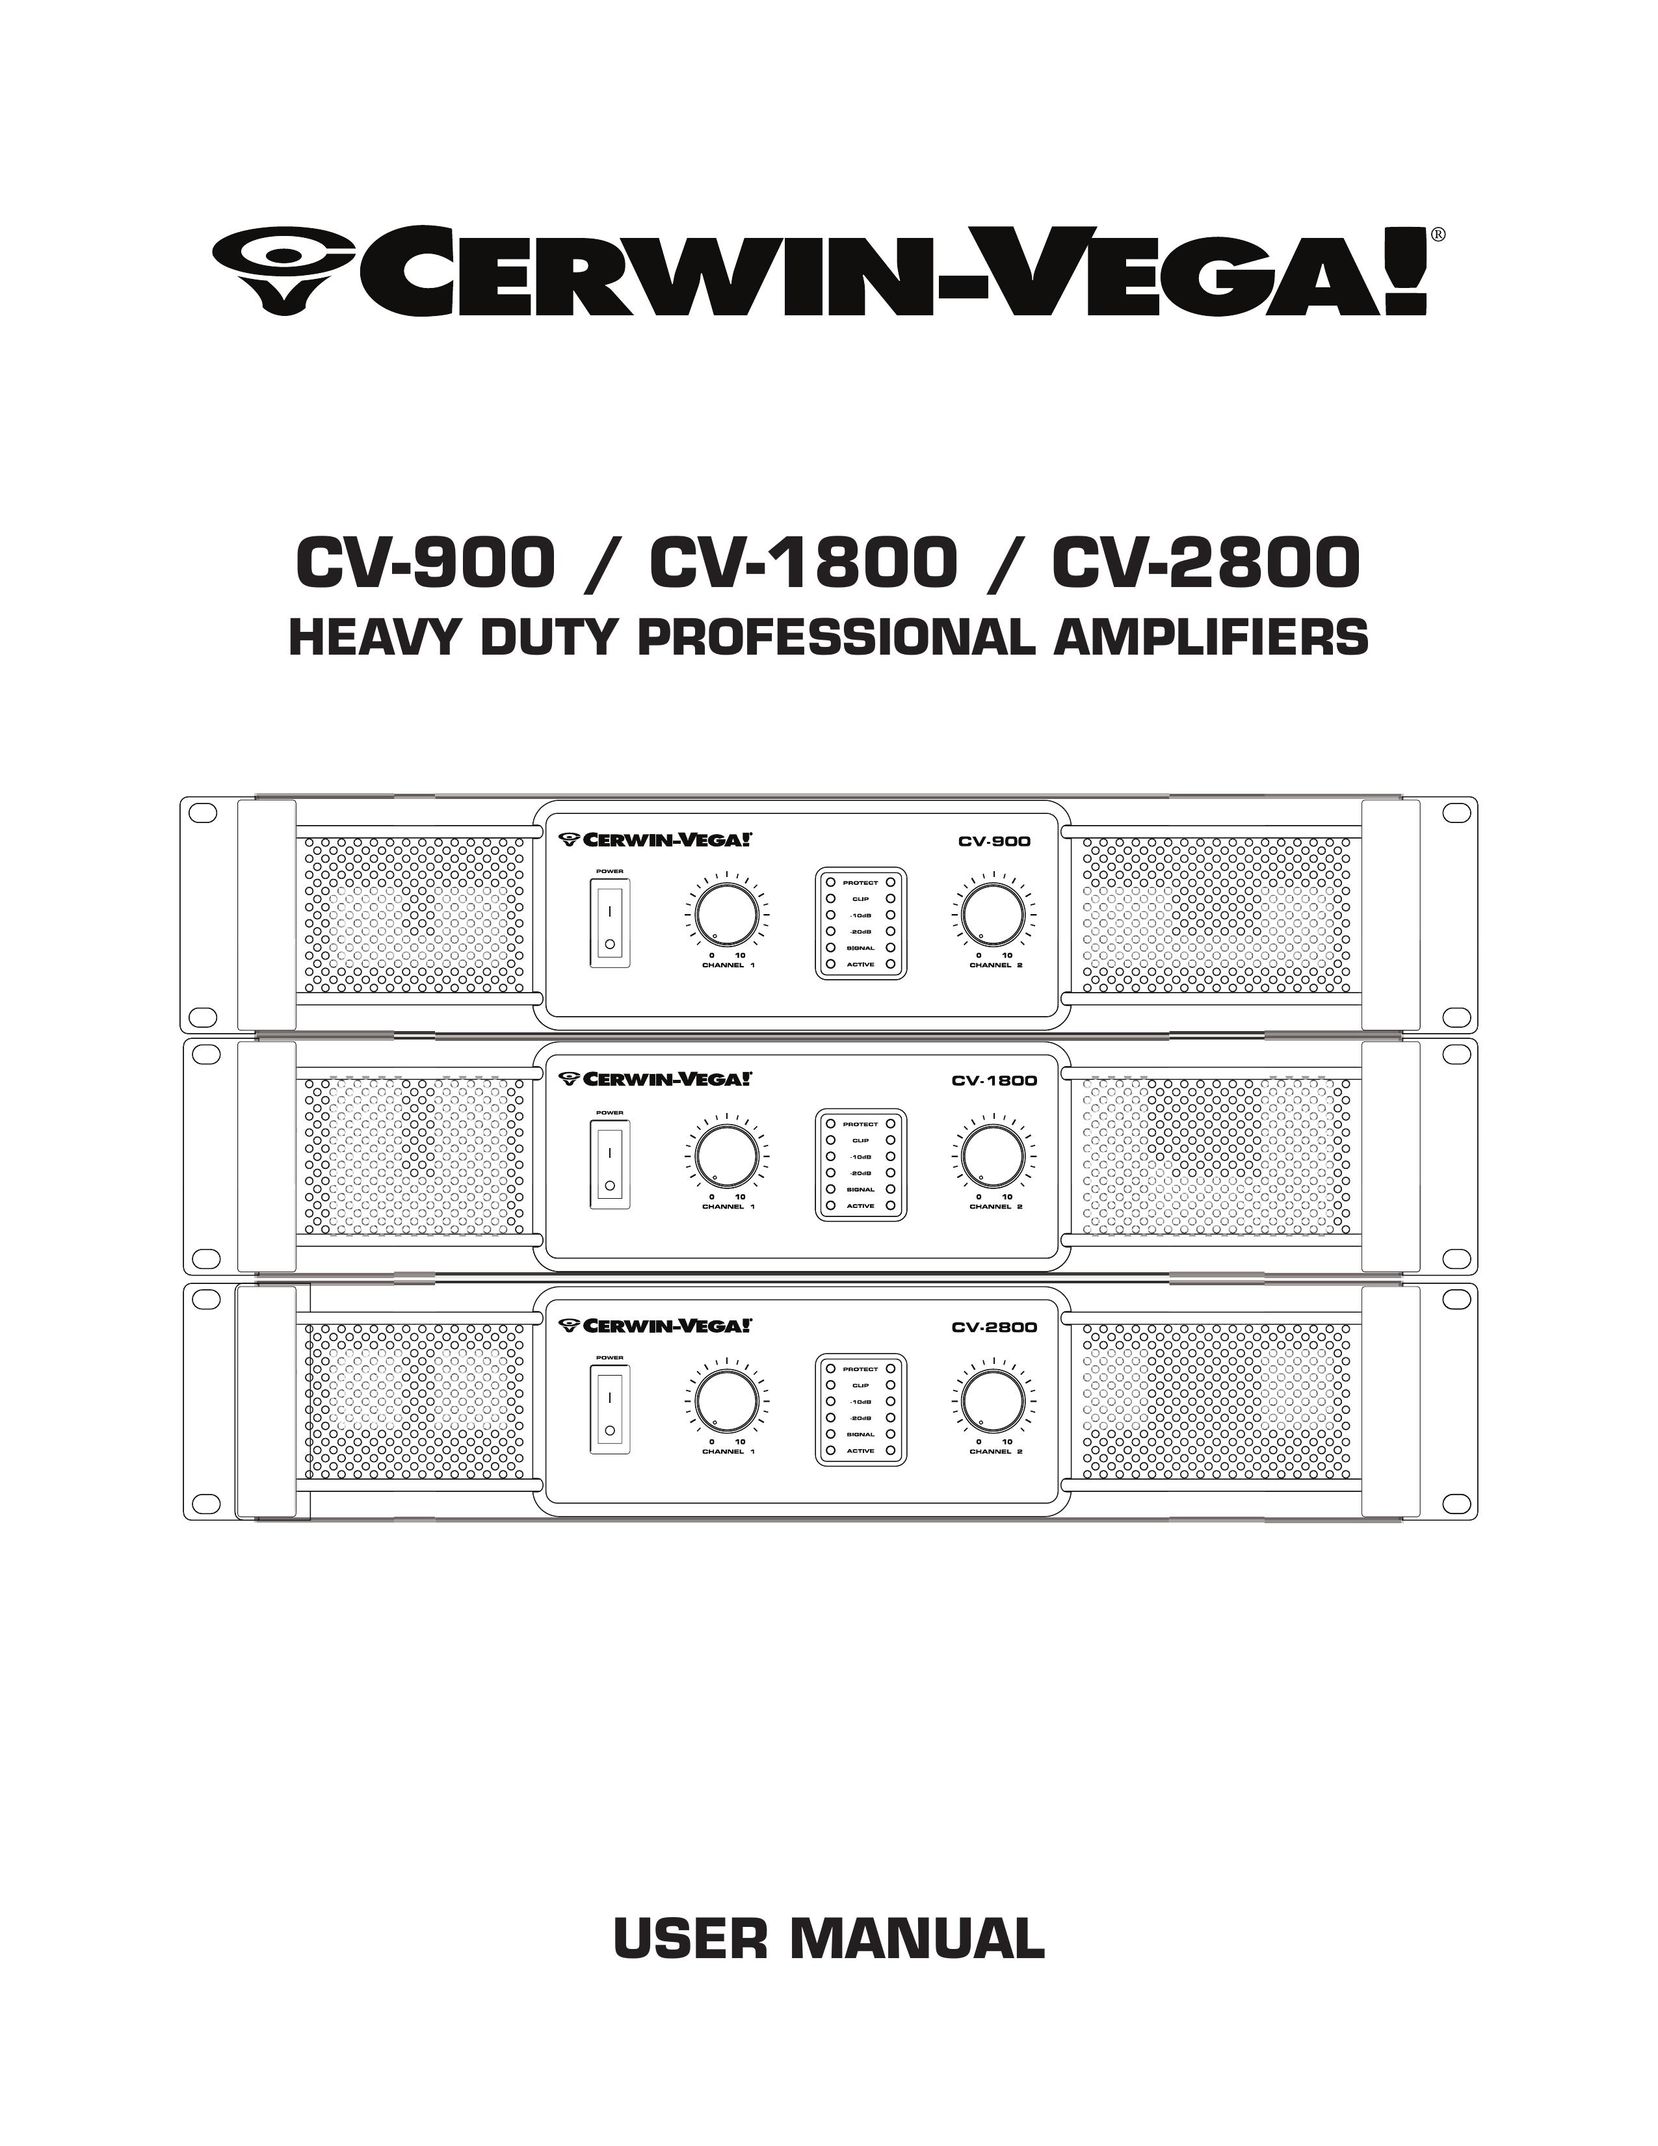 Cerwin-Vega CV-1800 Stereo Amplifier User Manual